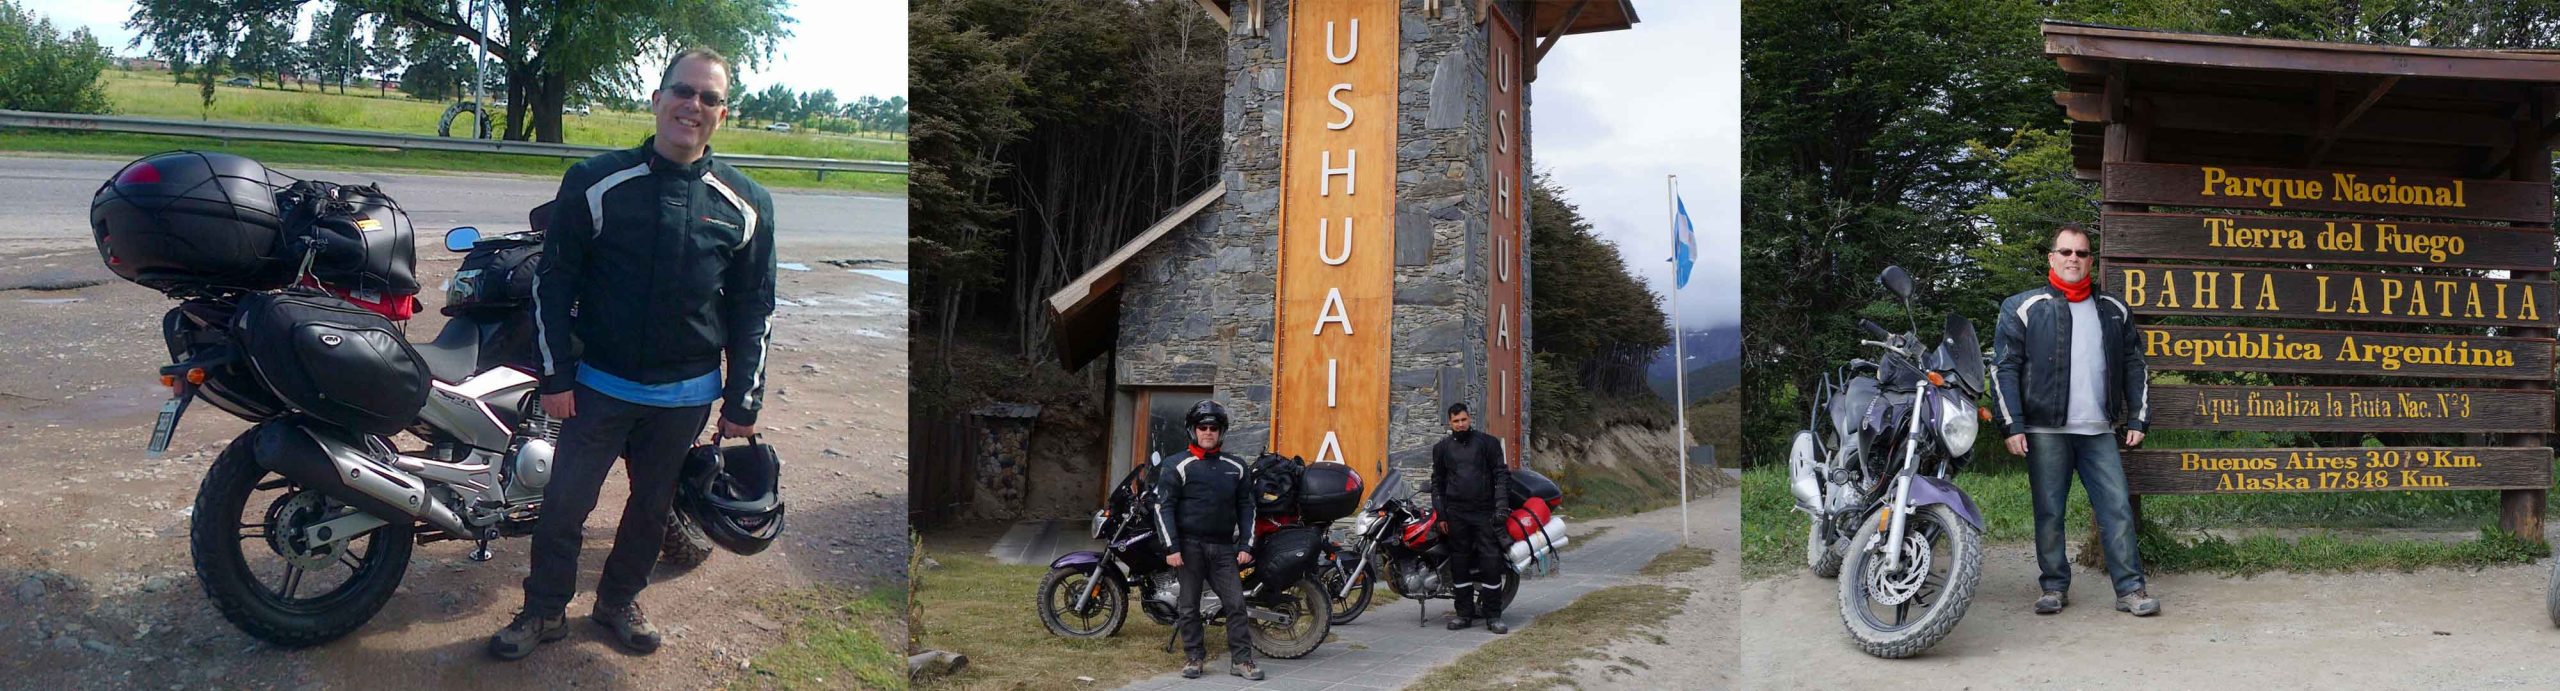 Un viaje a Ushuaia en 3 fotos